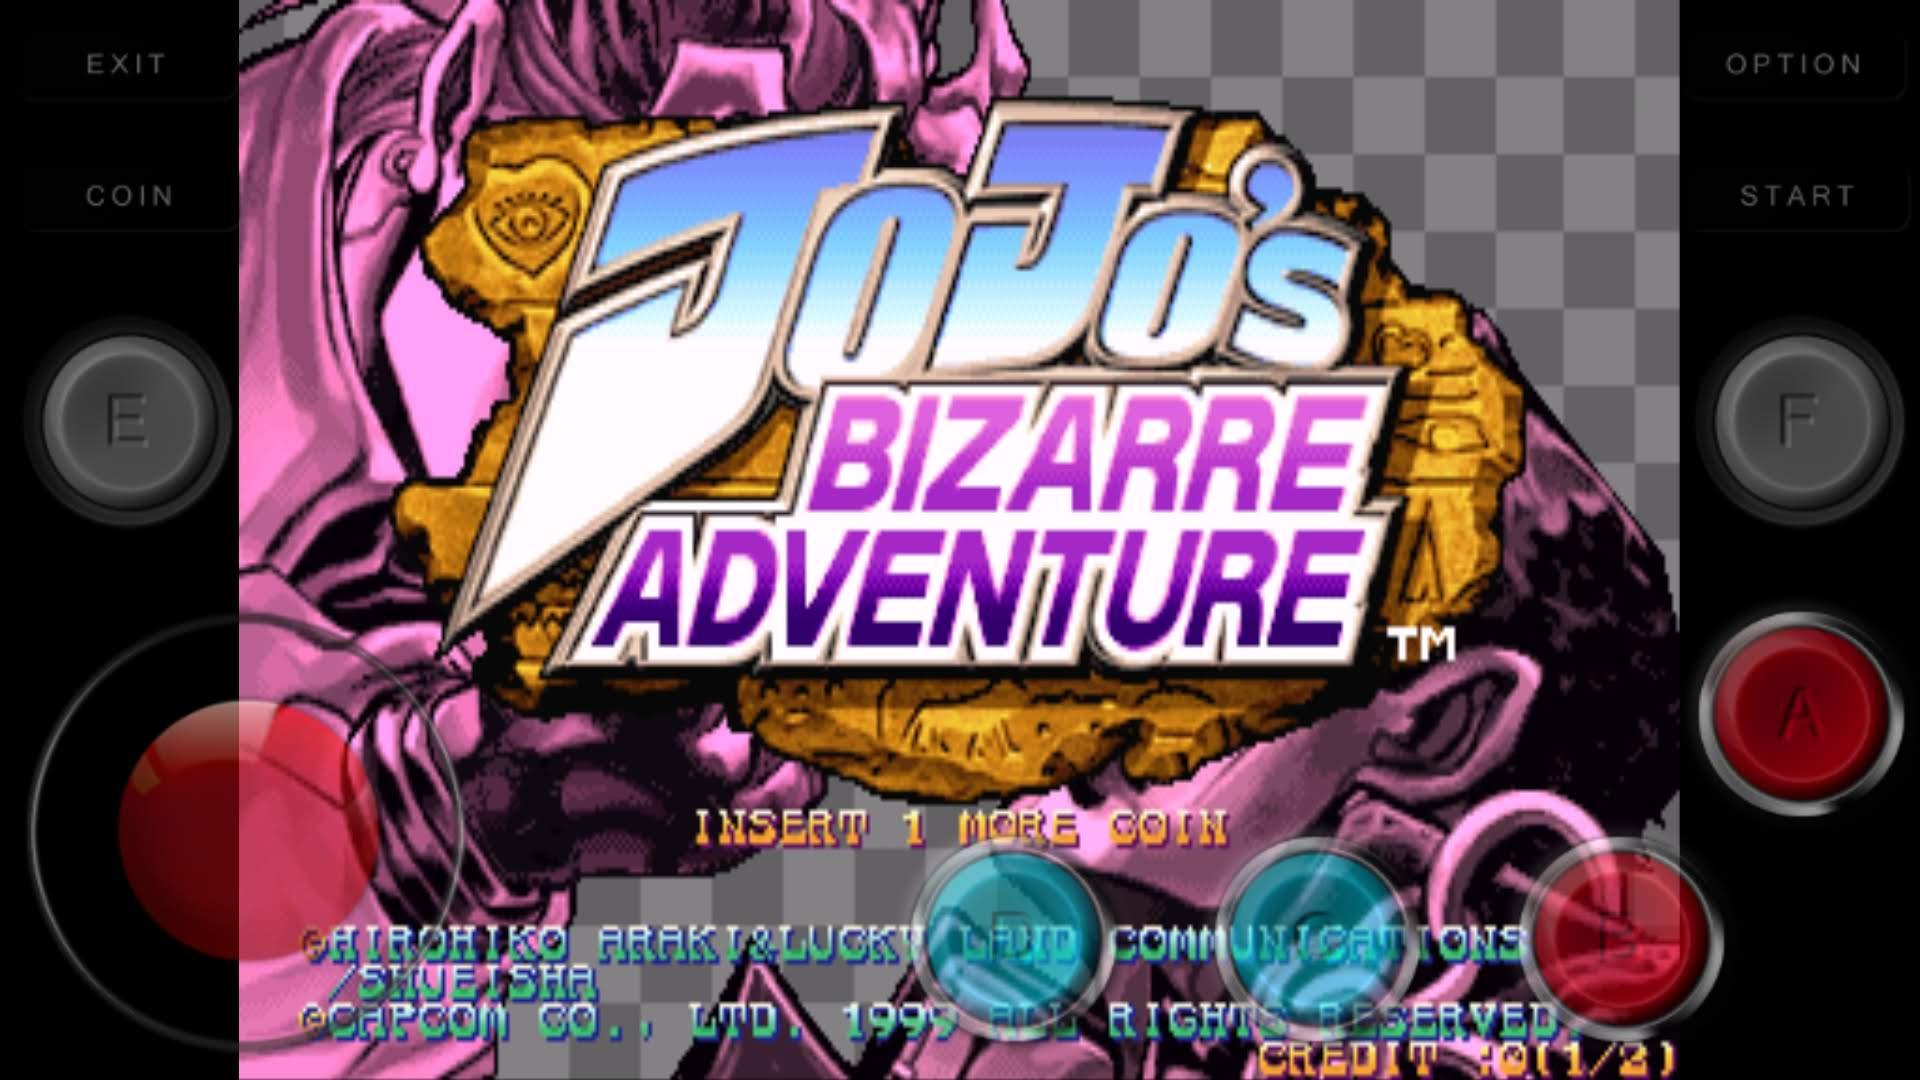 Code JoJo's Bizarre Adventure APK for Android Download